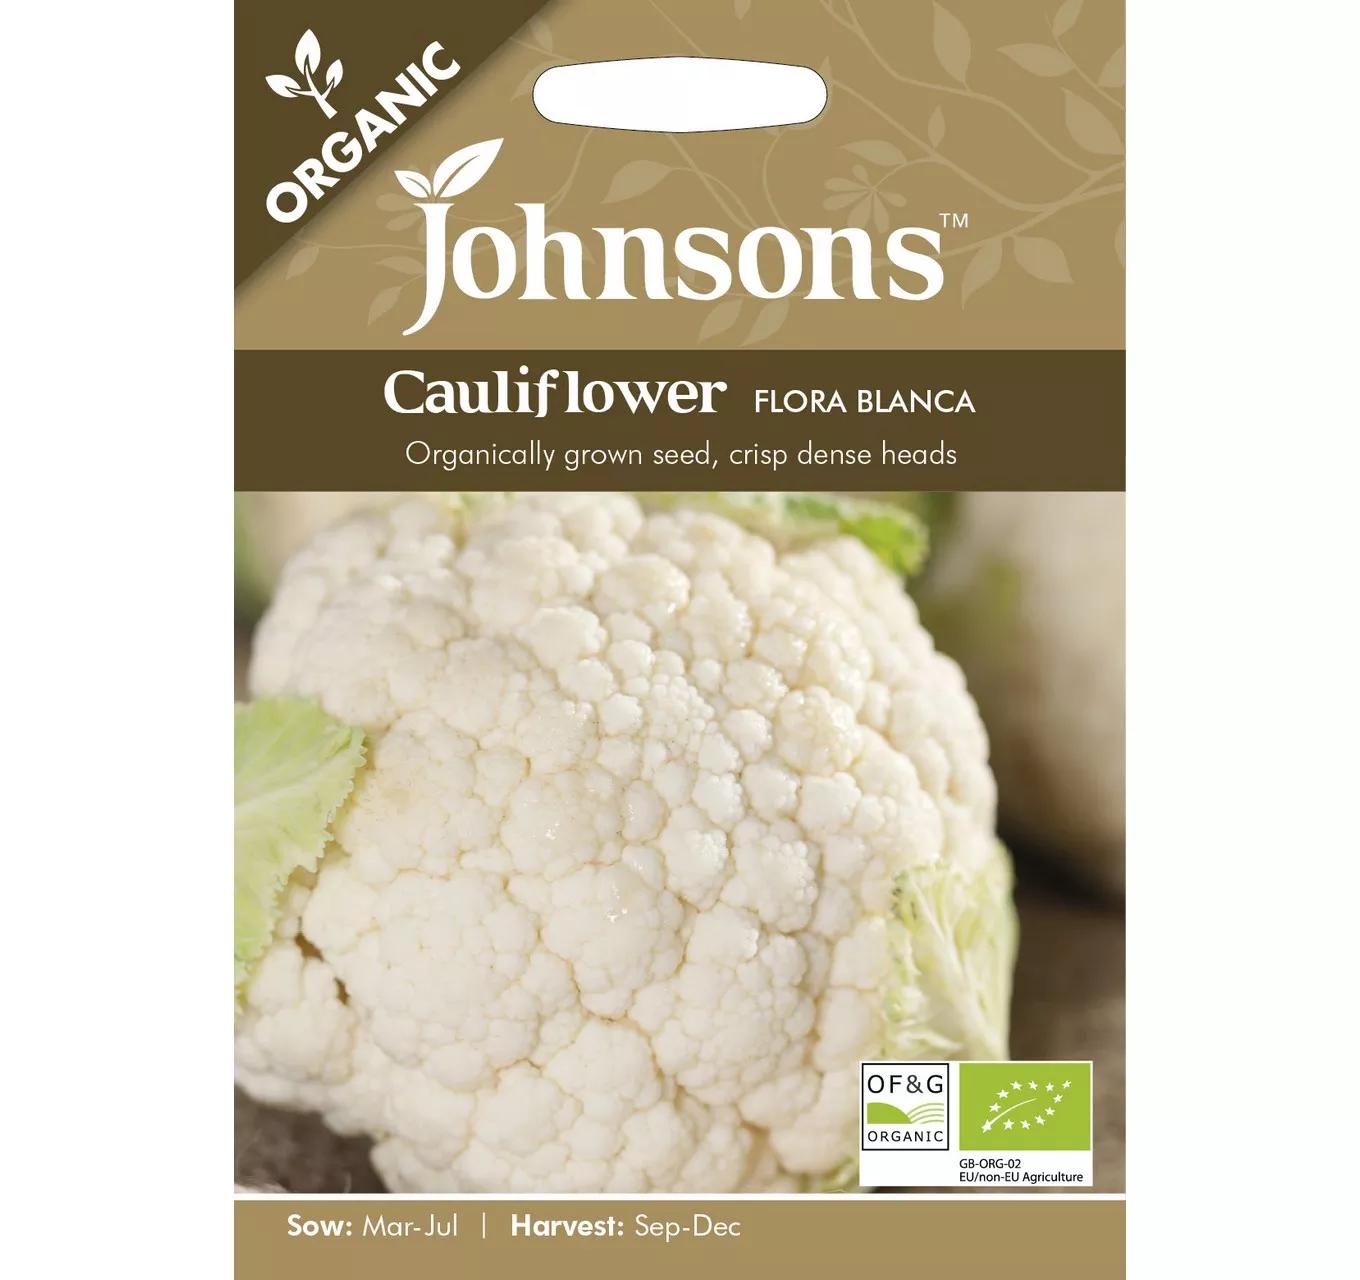 ORG Cauliflower Flora Blanca